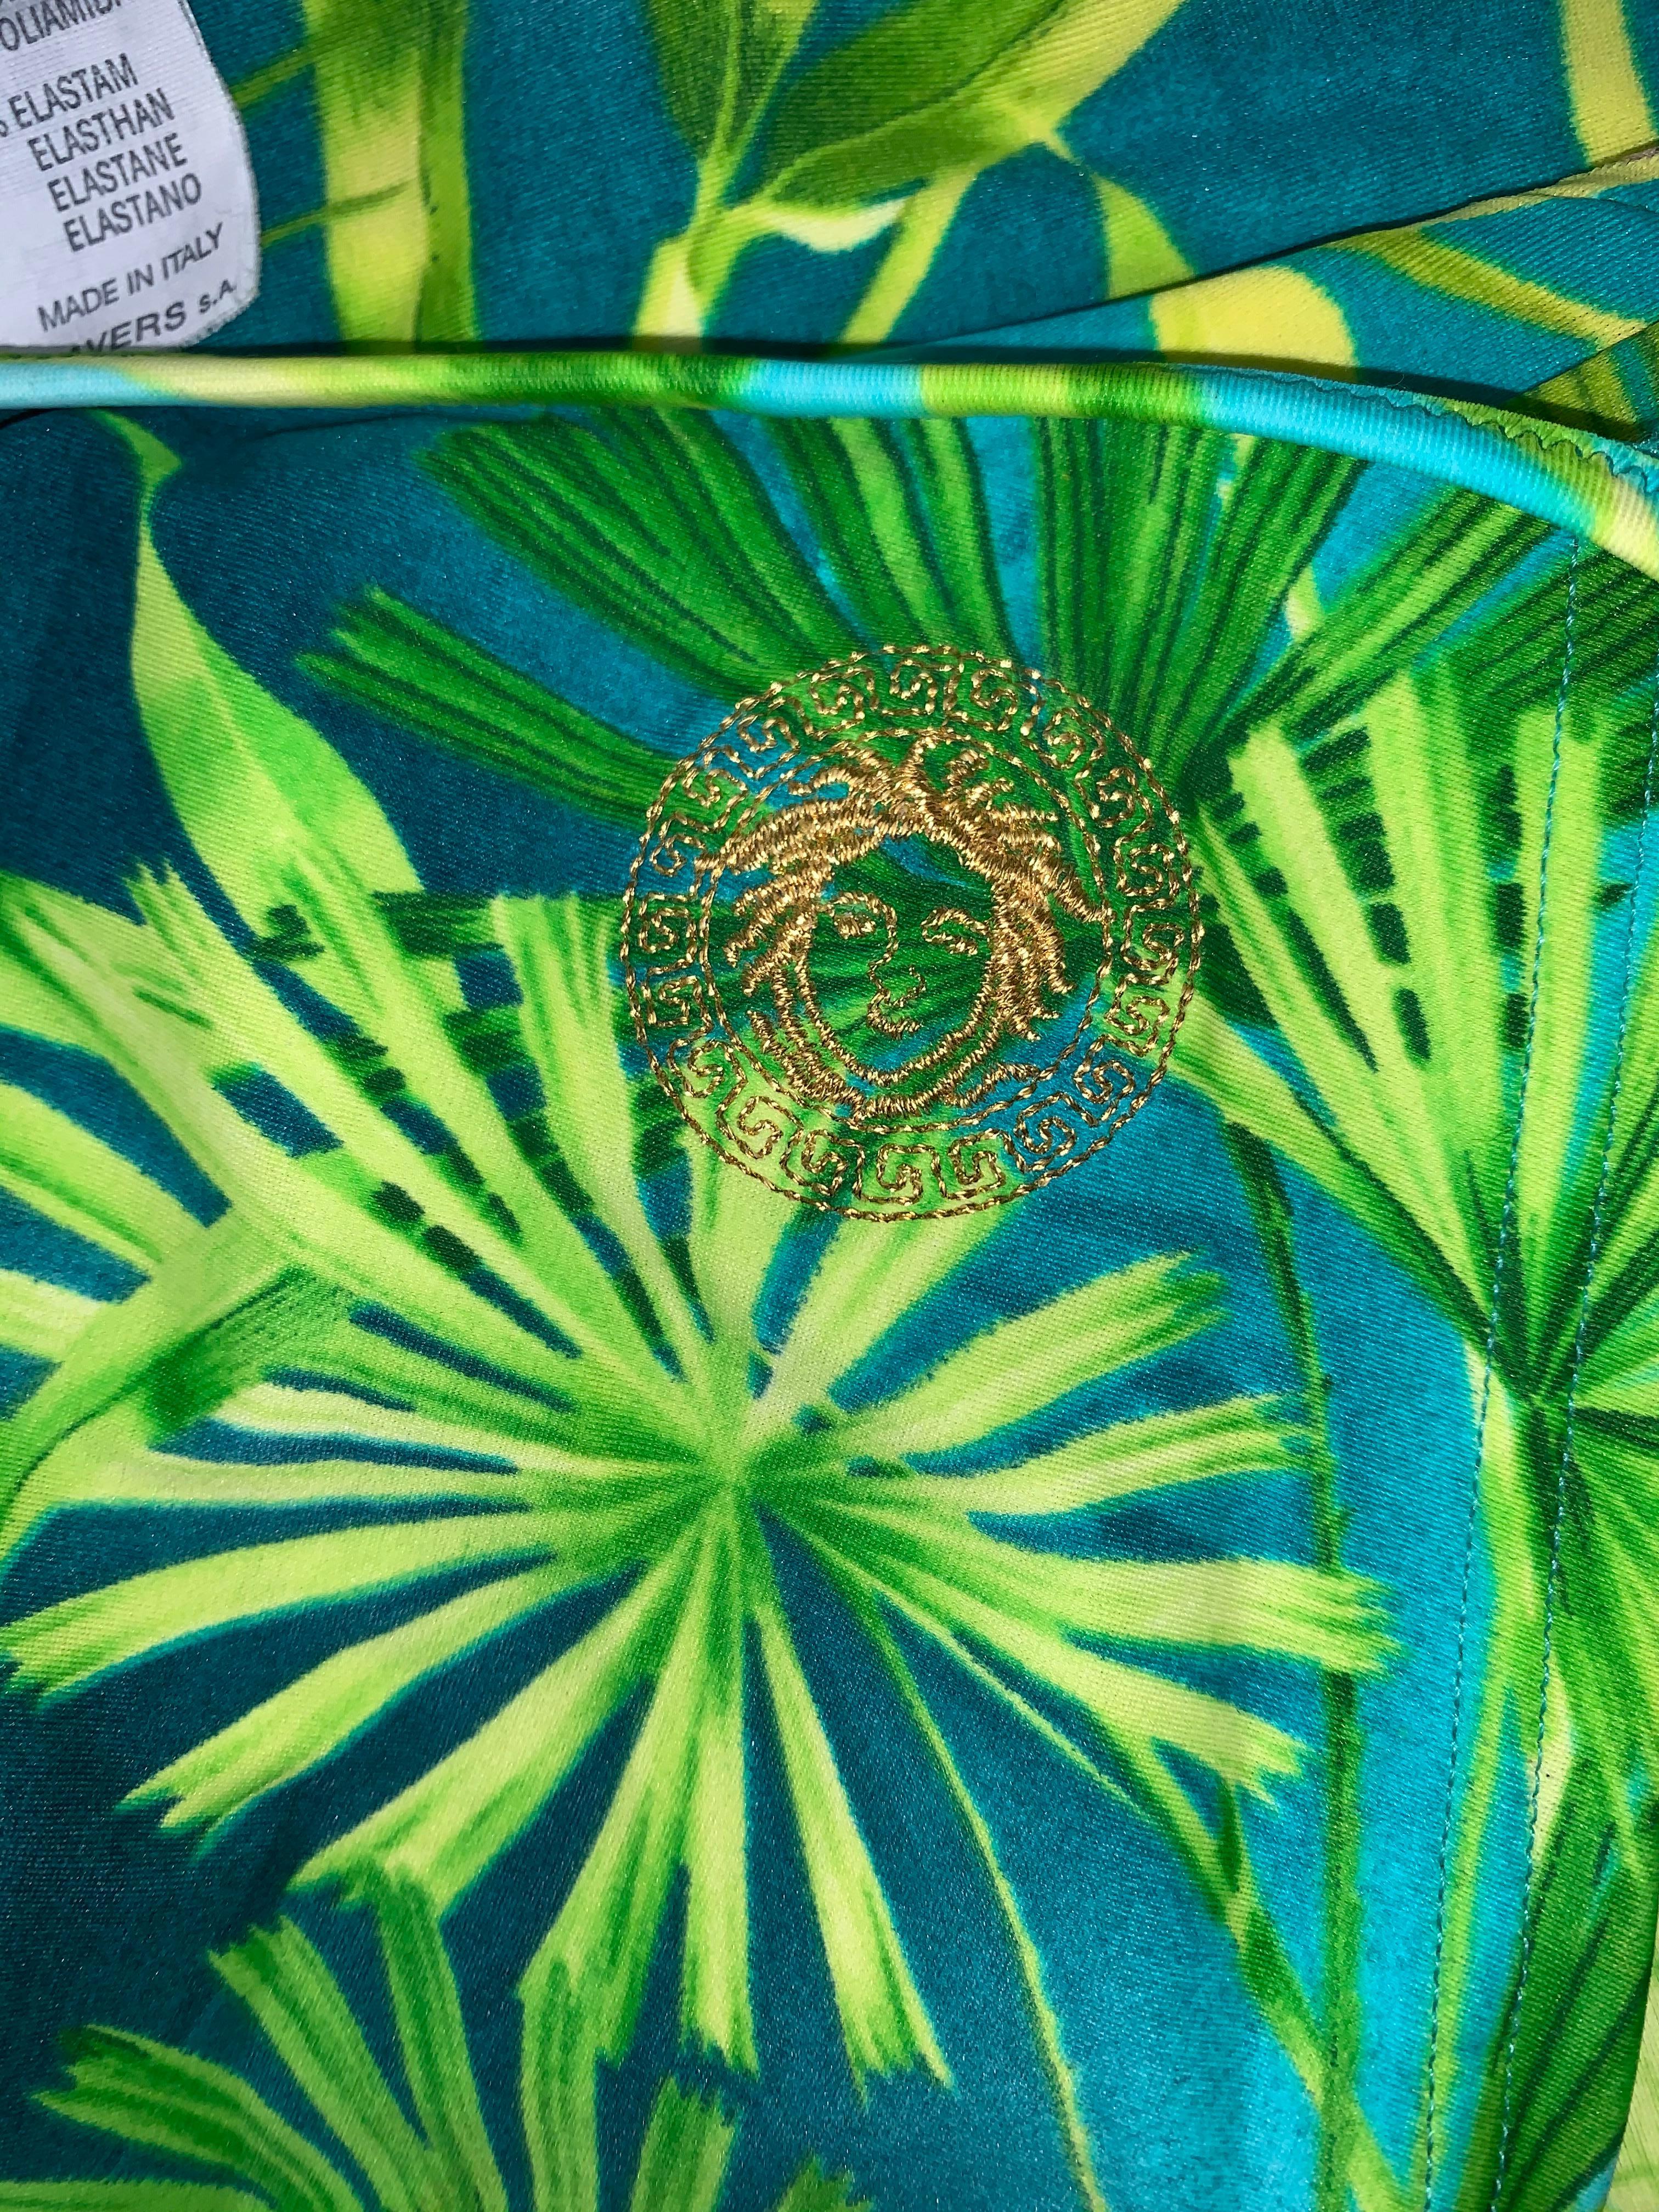 Green S/S 2000 Gianni Versace Famous Tropical Palm Print Strapless Ultra Low Bikini Sw